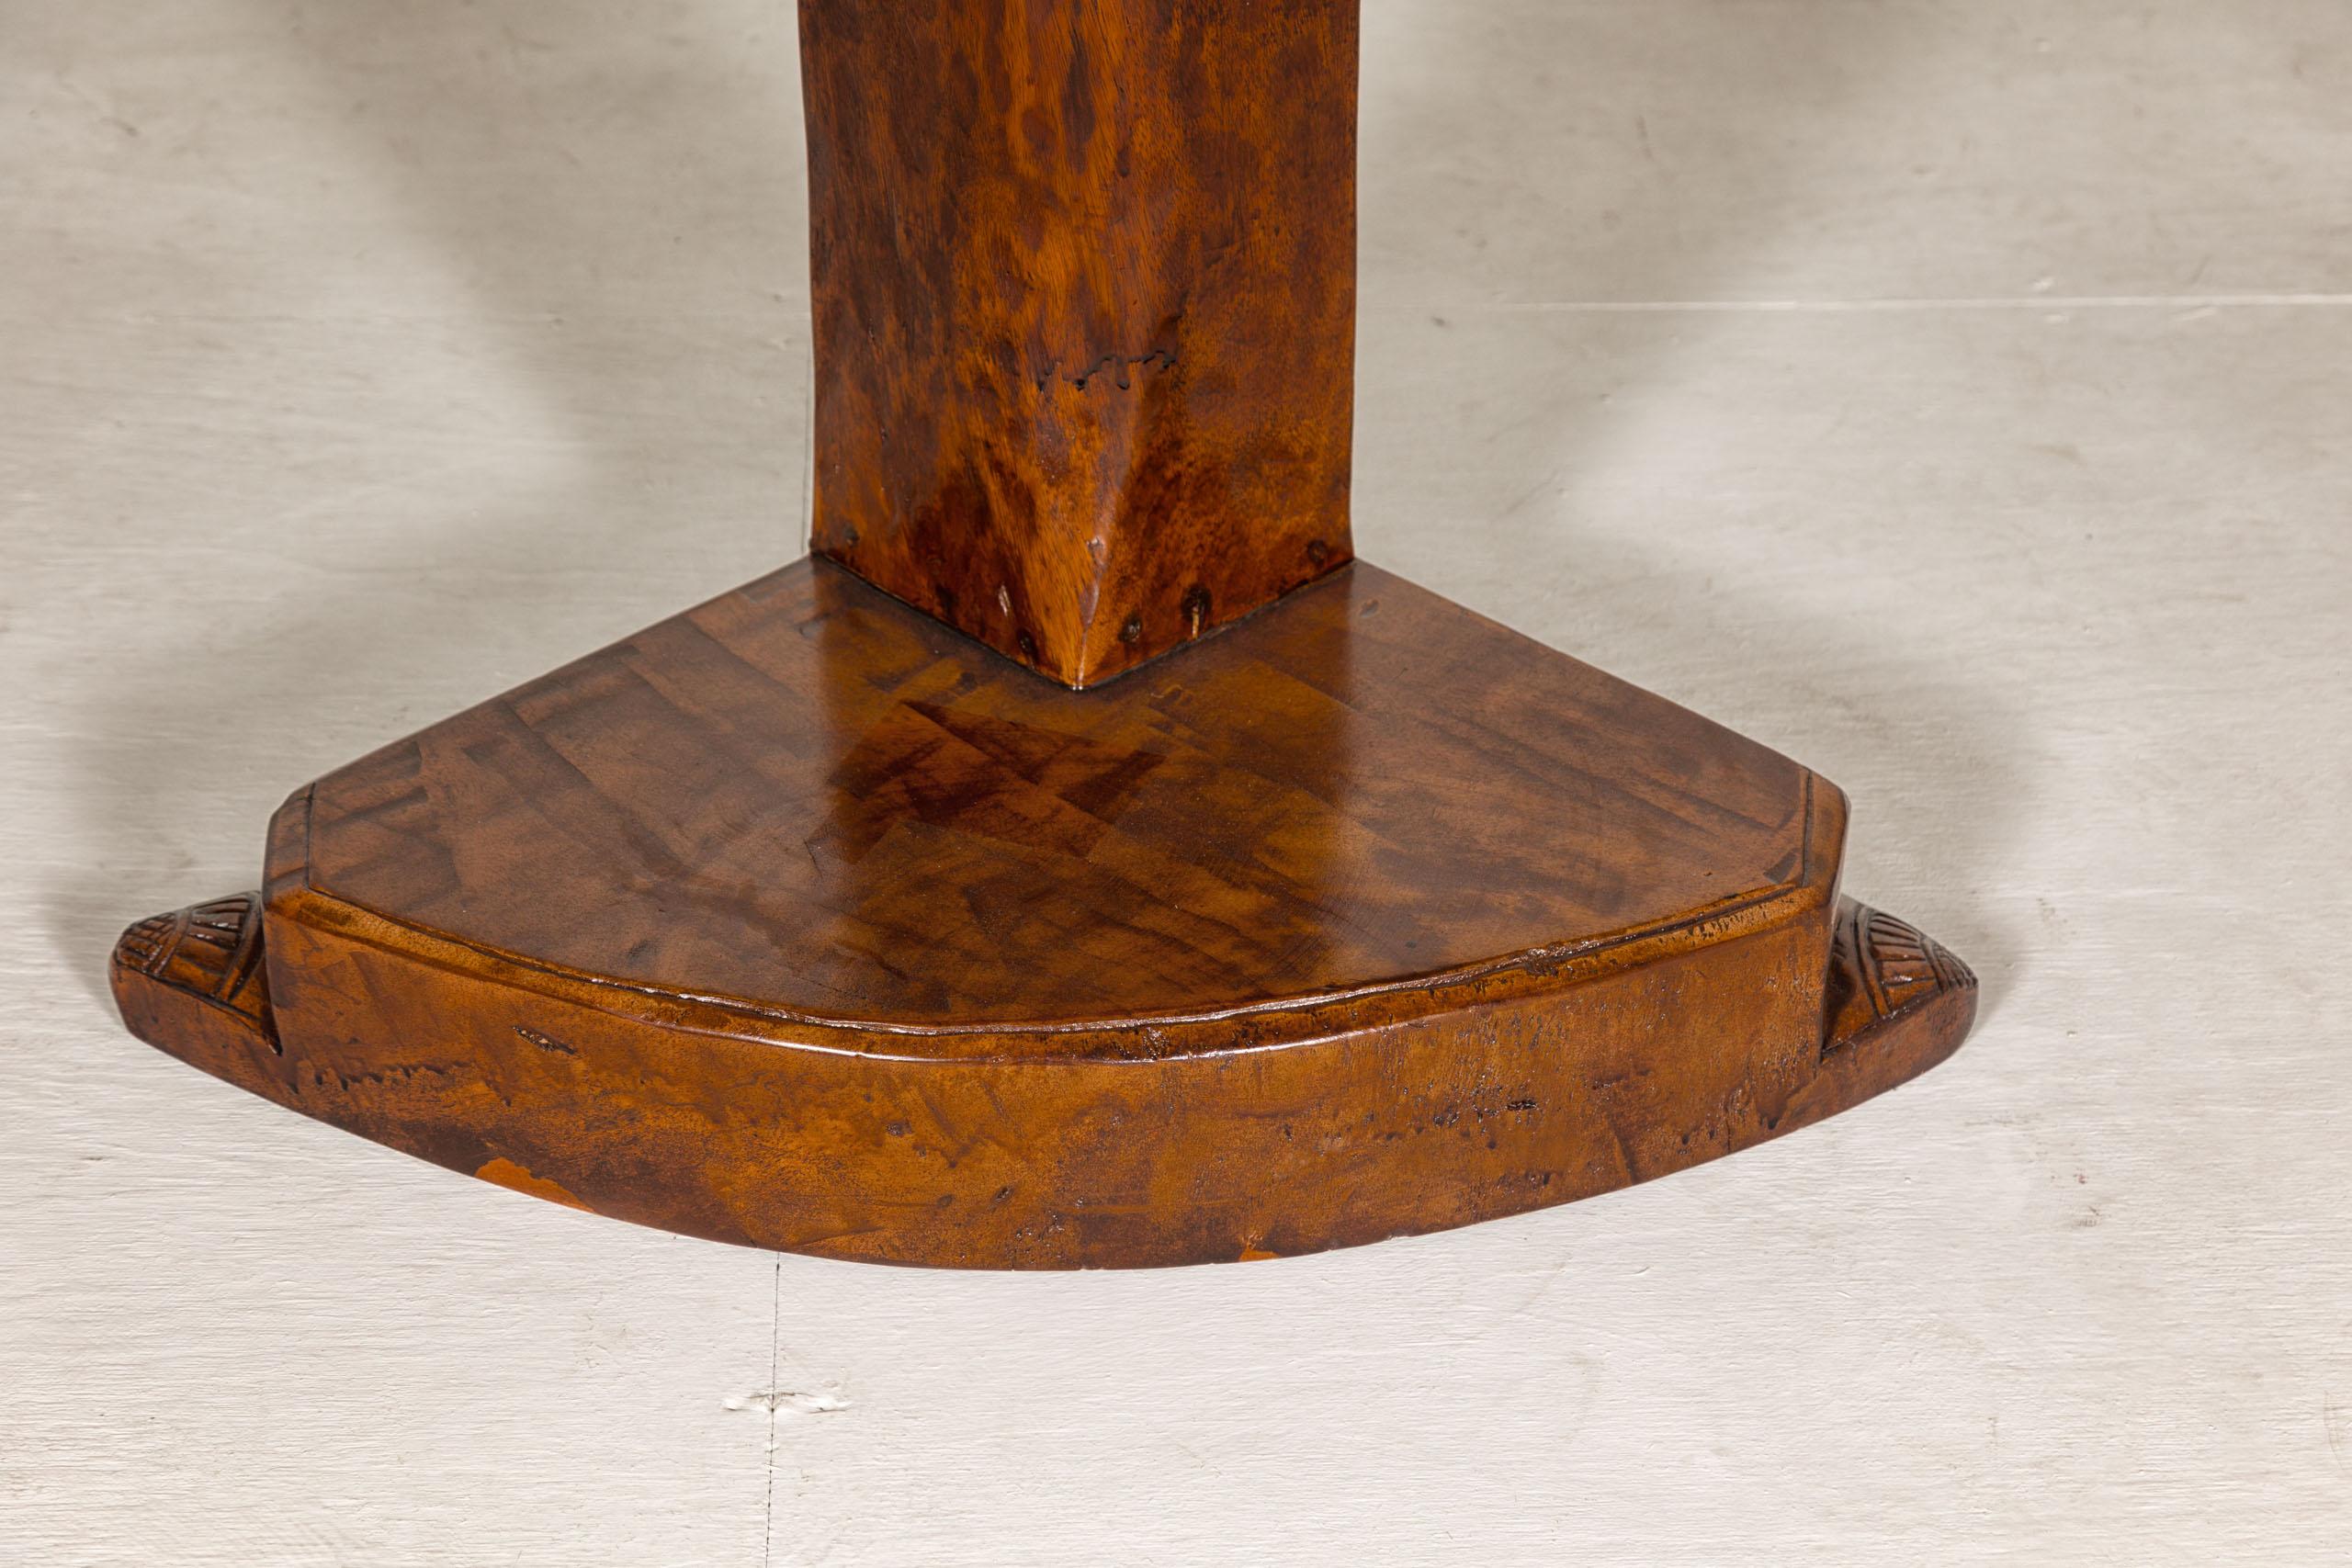 Wood Rustic Vintage Corner Demilune Pedestal Table with Delicately Carved Base For Sale